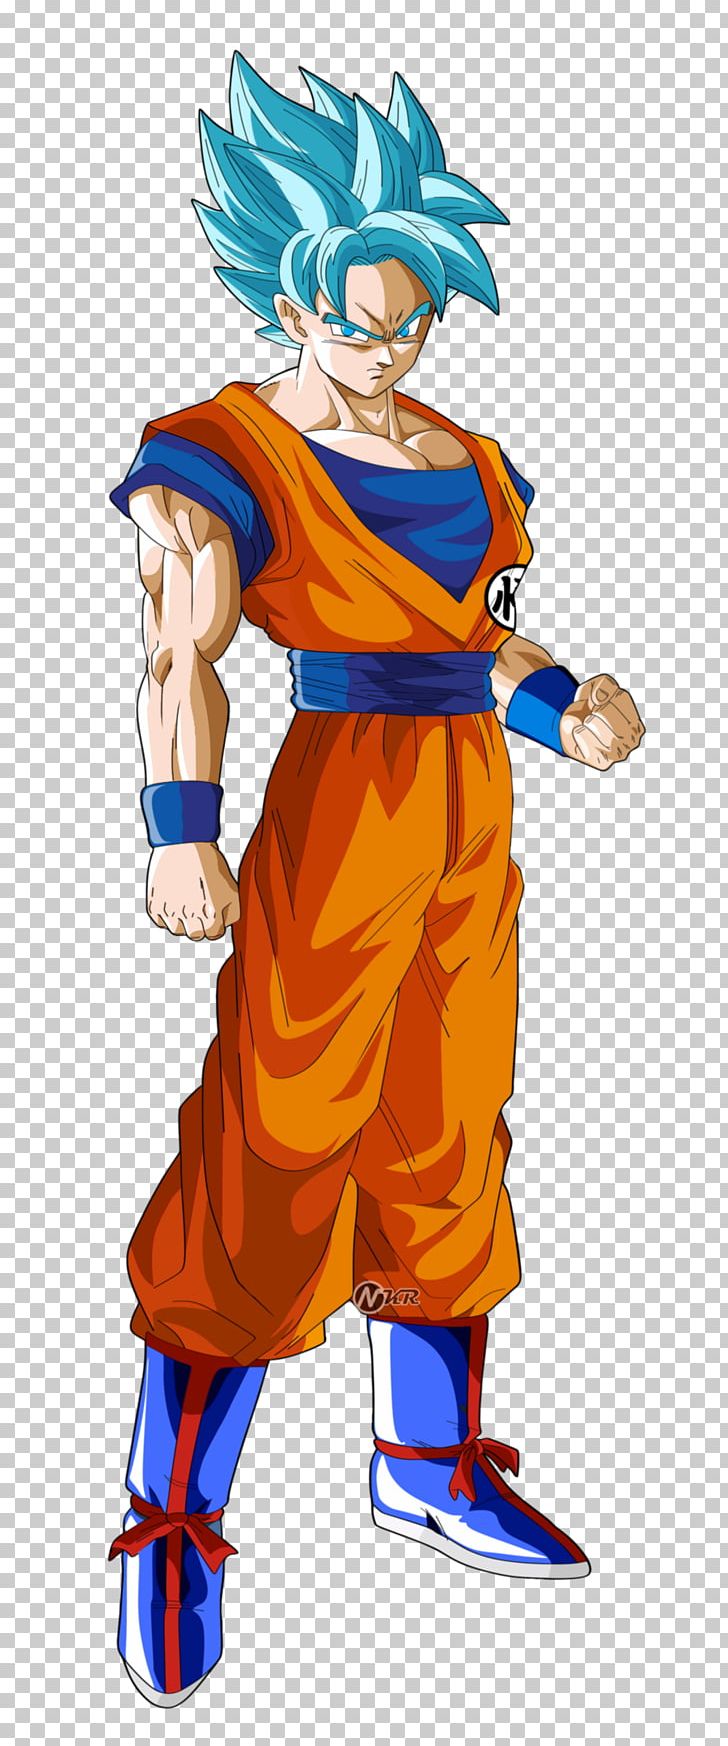 Goku Gohan Vegeta Dragon Ball FighterZ Frieza PNG, Clipart, Anime, Art, Cartoon, Clothing, Costume Free PNG Download